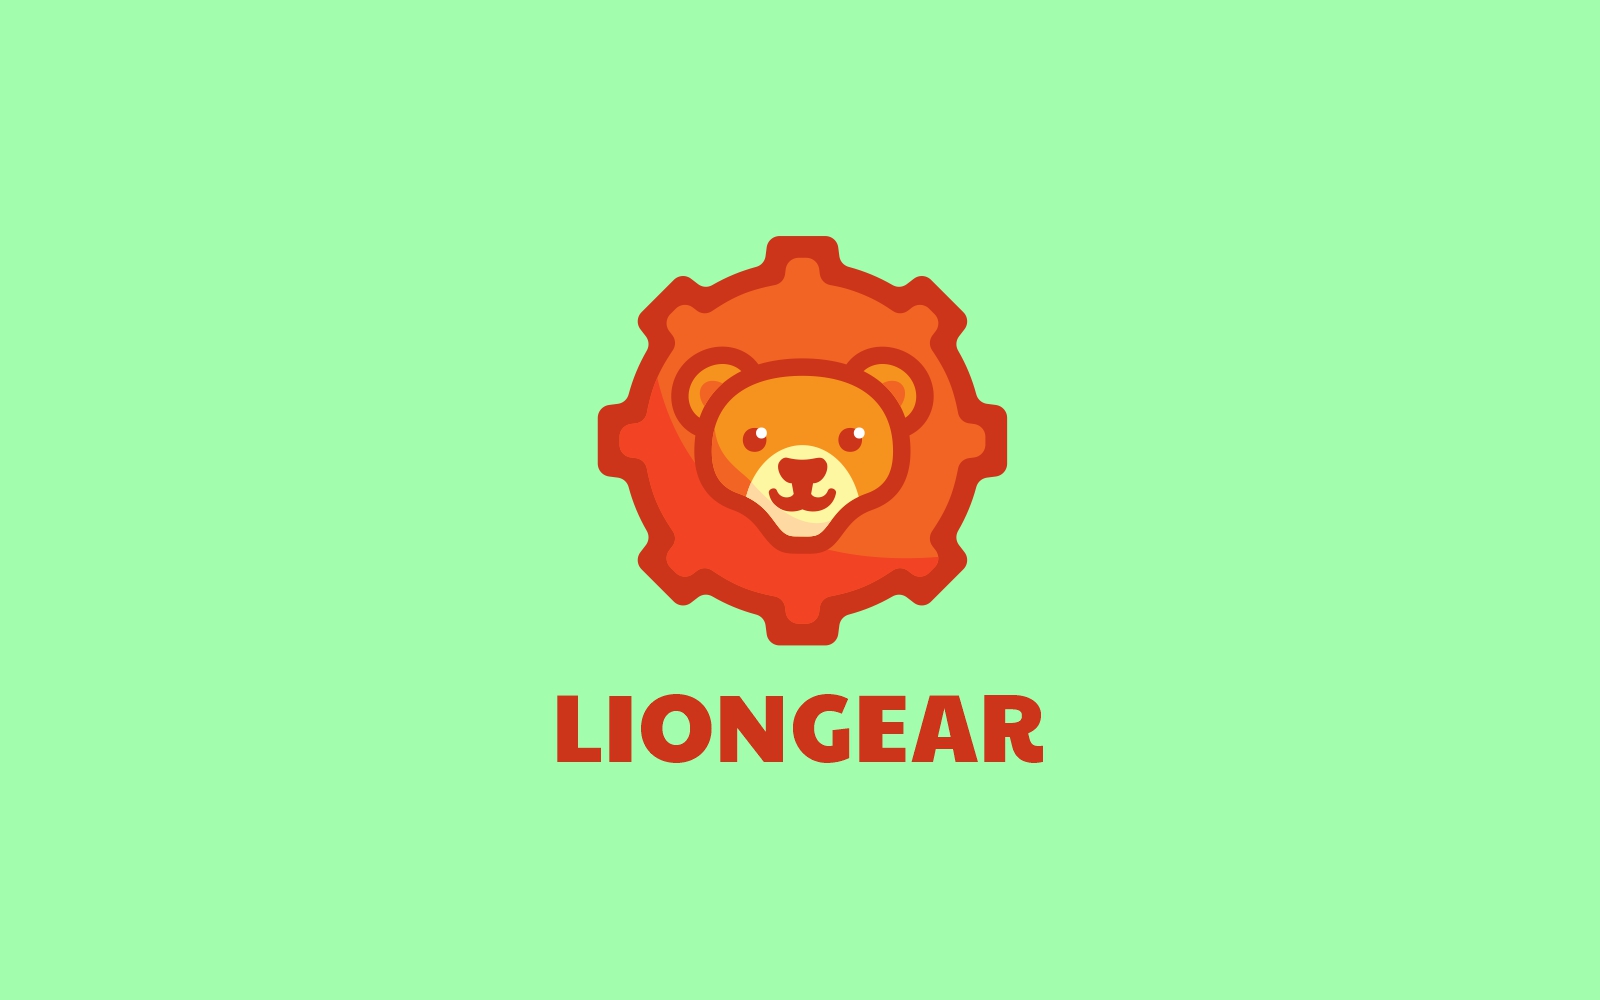 Lion Gear Simple Mascot Logo